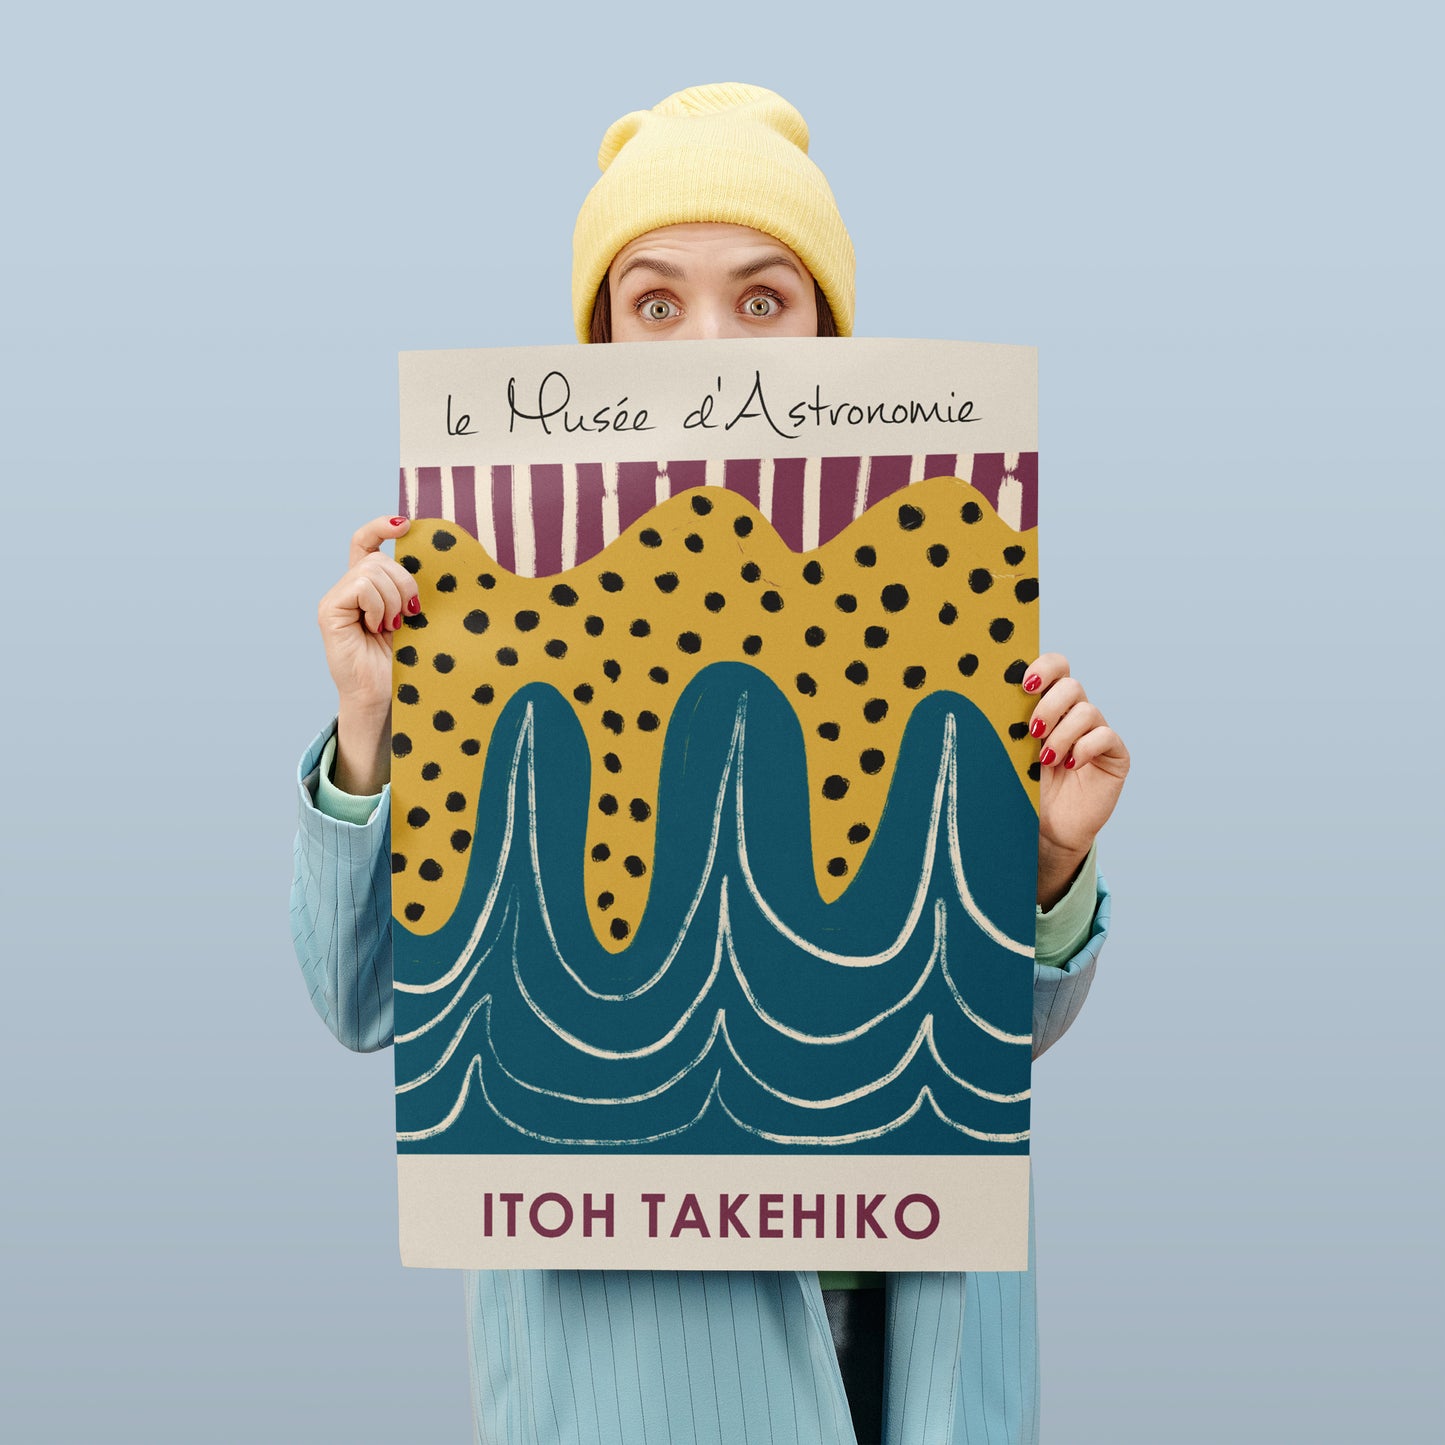 Itoh Takehiko - Japanese Artist Poster